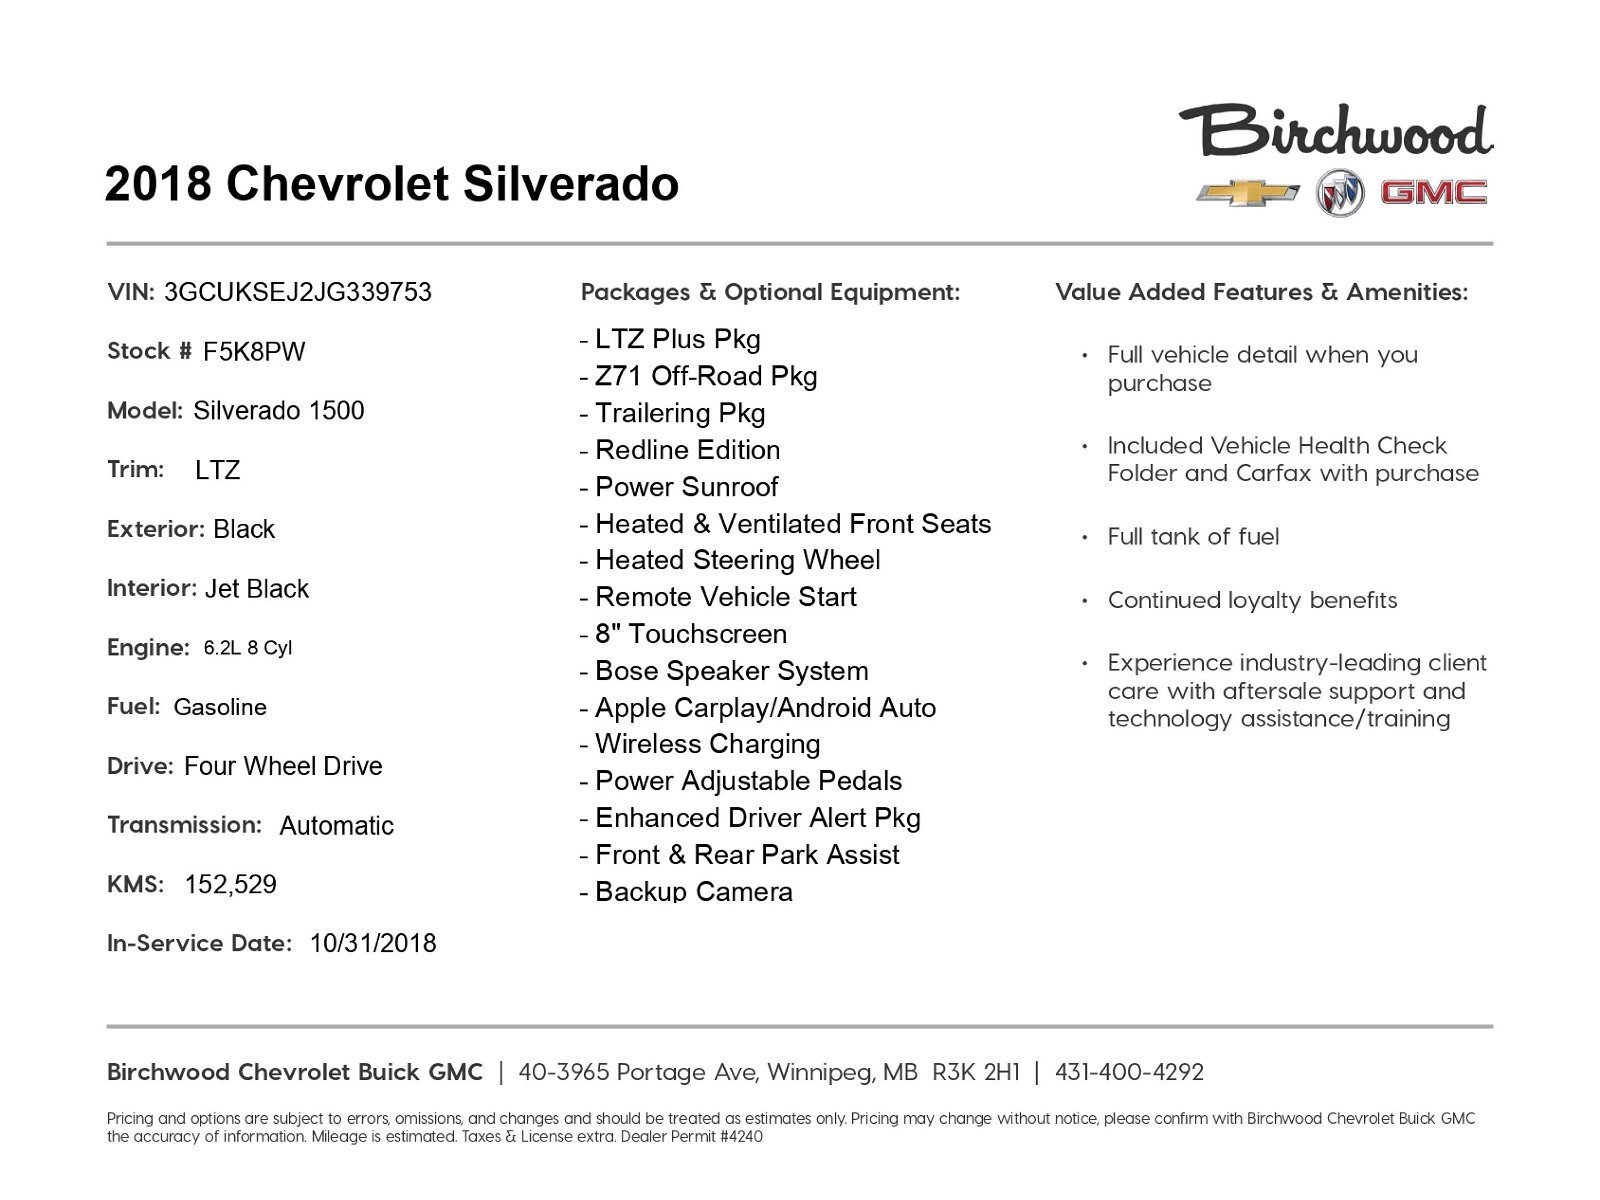 2018 Chevrolet Silverado 1500 LTZ 2-year Maintenance Free!